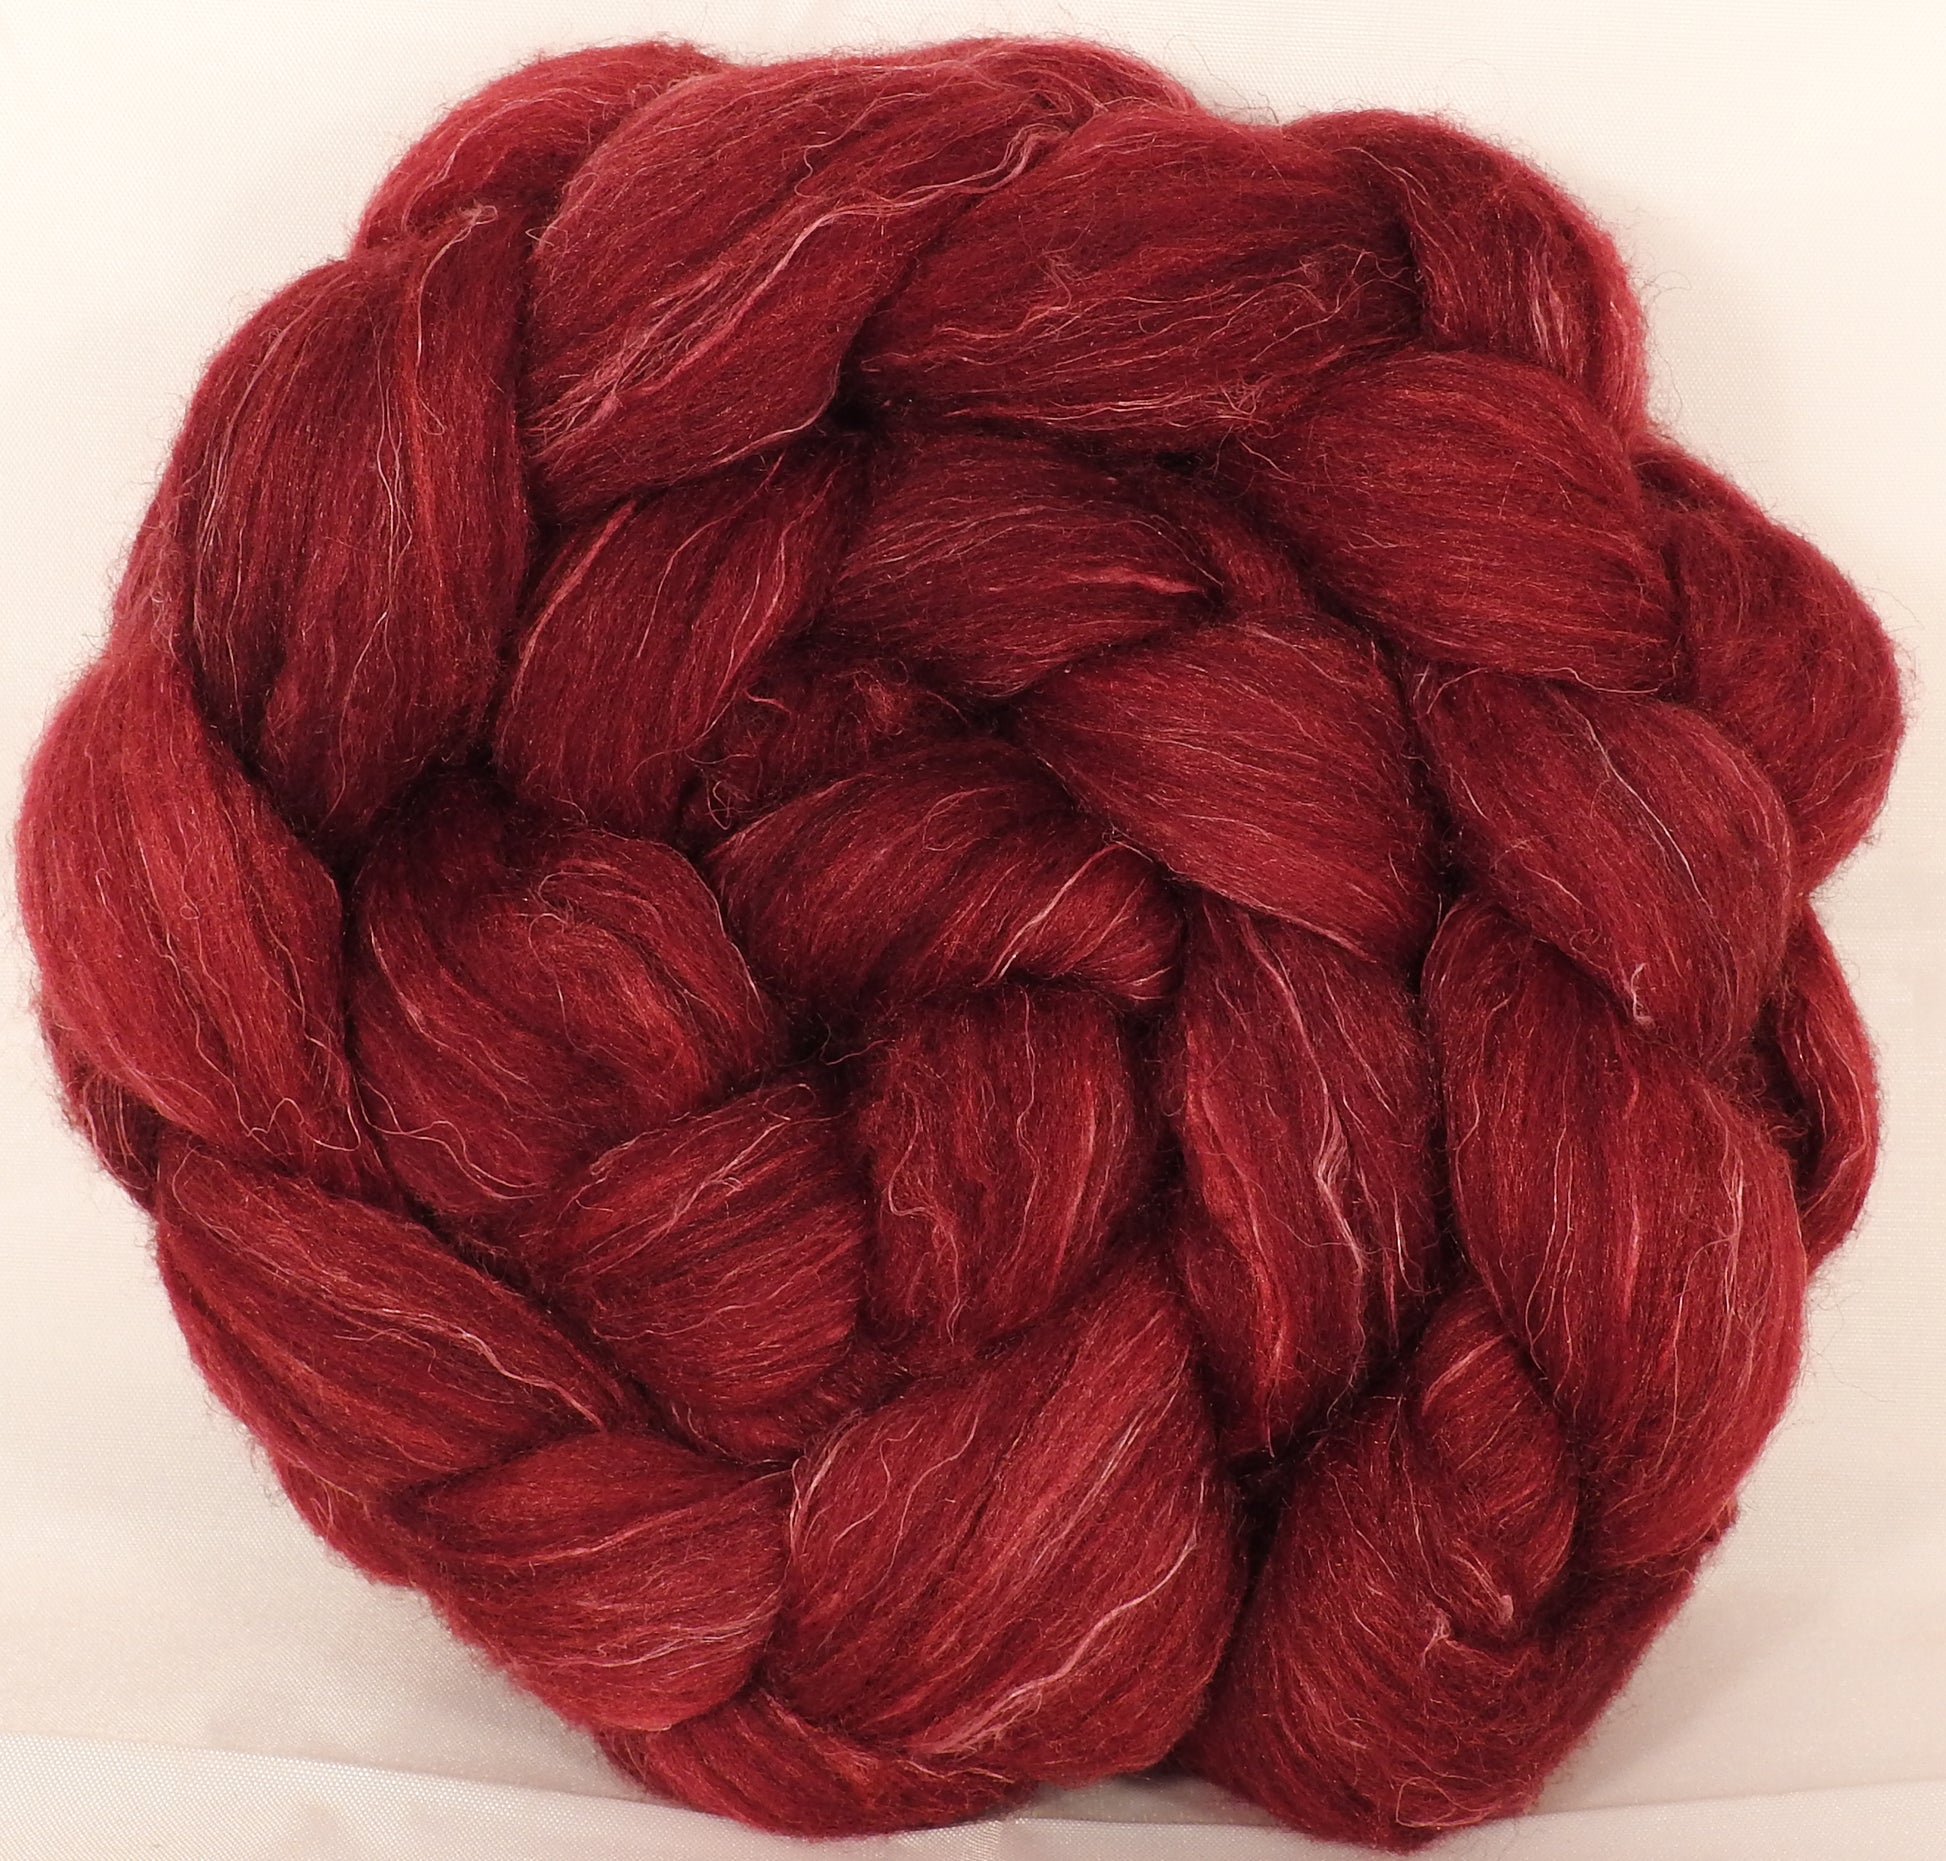 Batt in a Braid #38 - Crimson- (5.6 oz.) Shetland/ Falkland Merino / tussah silk/ flax (40/25/25/10) - Inglenook Fibers